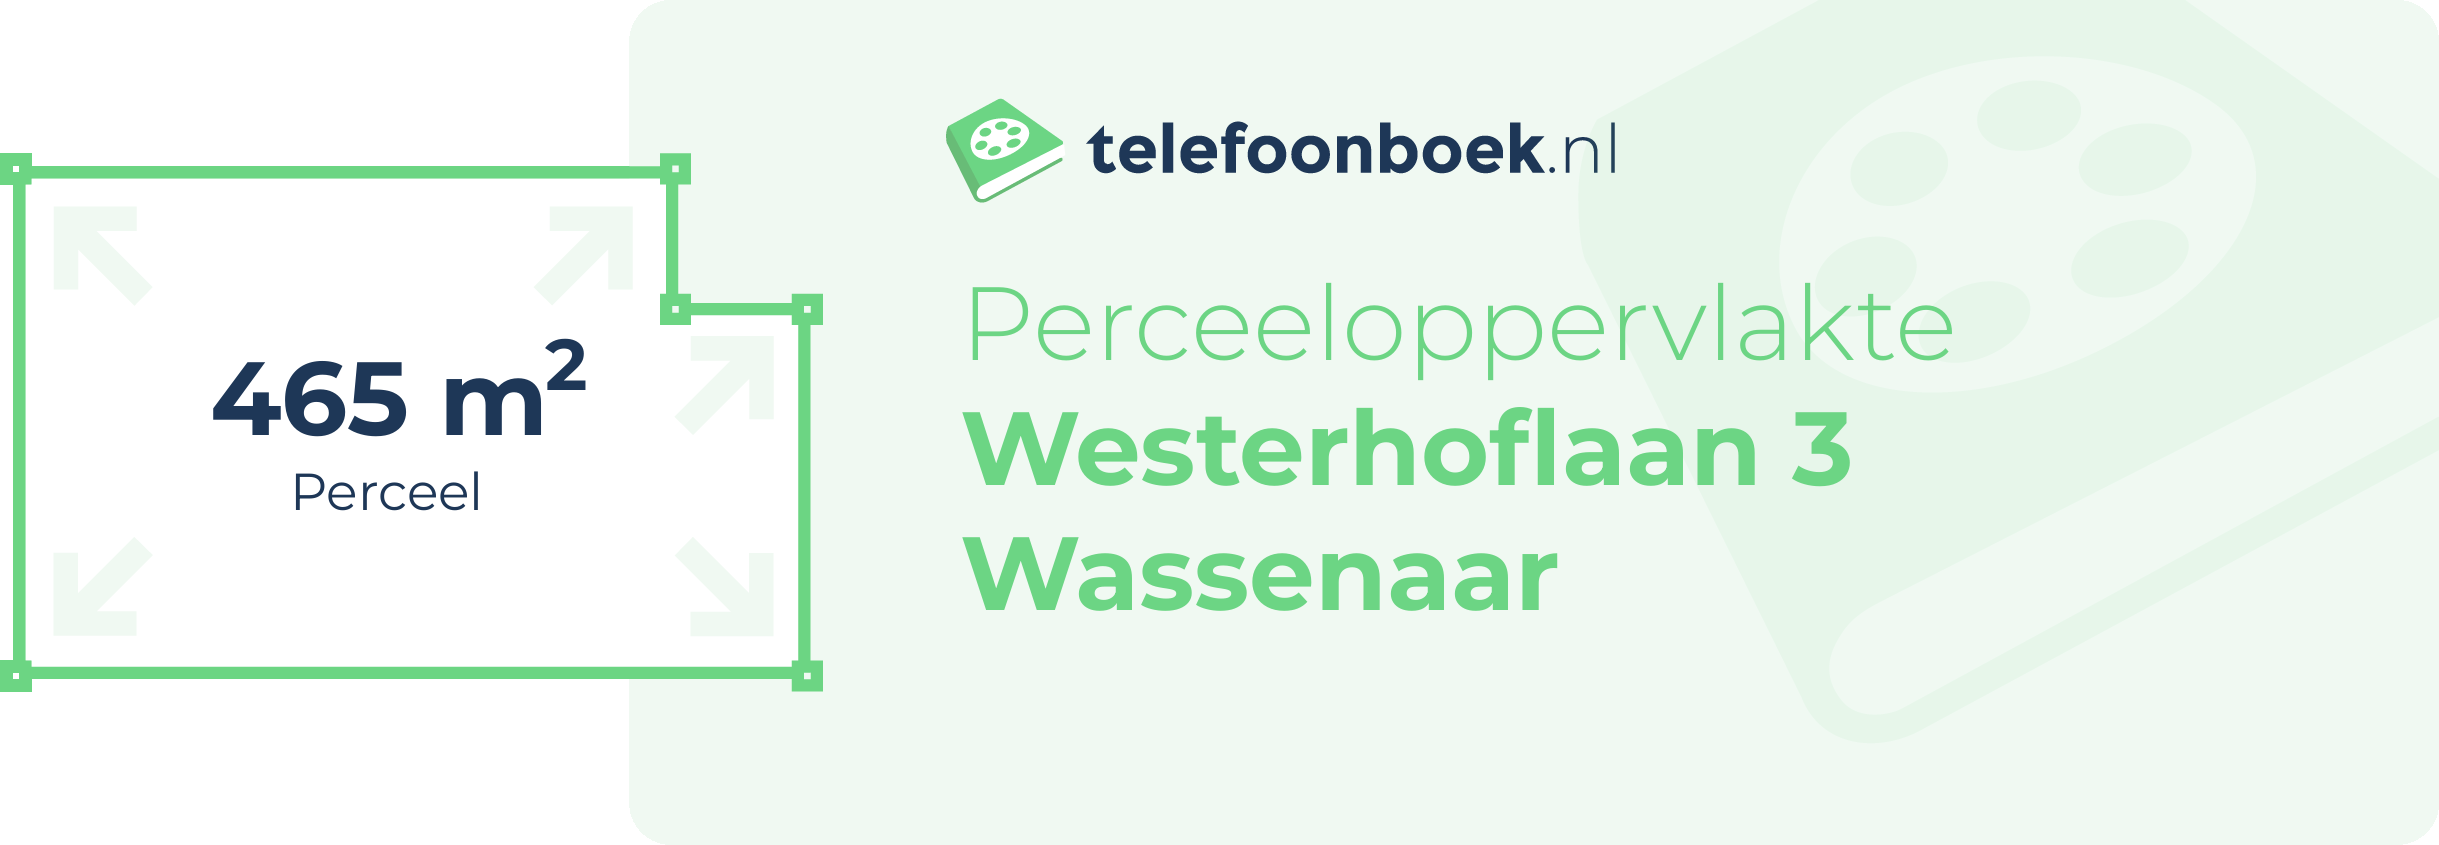 Perceeloppervlakte Westerhoflaan 3 Wassenaar